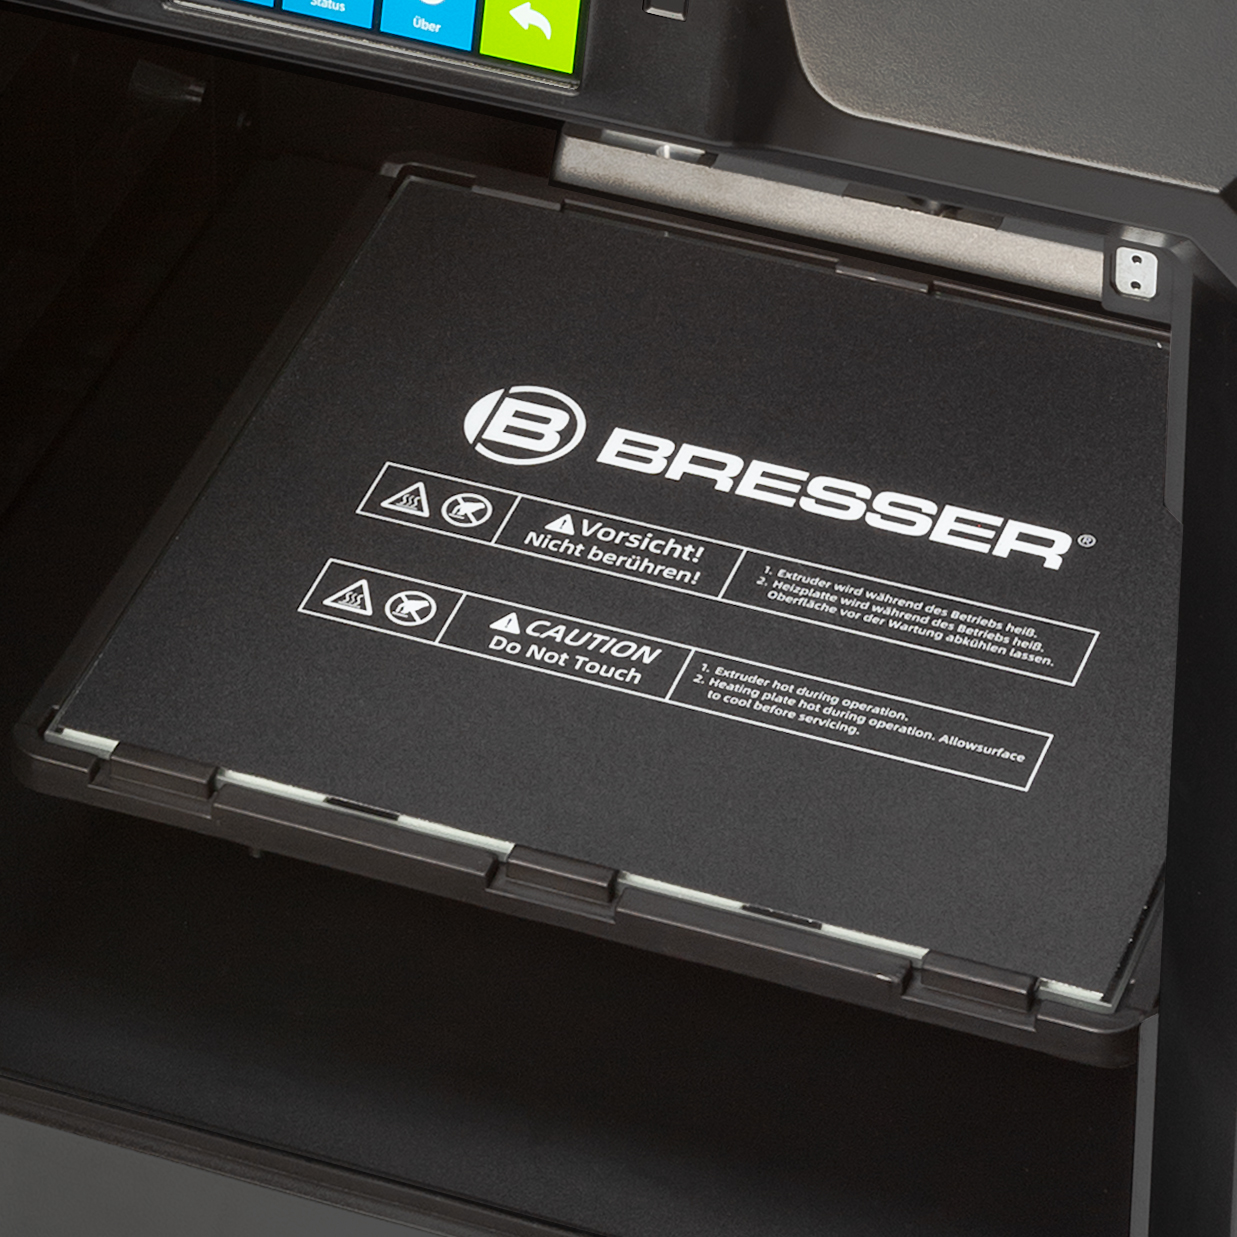 BRESSER REX II WLAN-3D-Drucker (Gebrauchtware/Rückläufer)